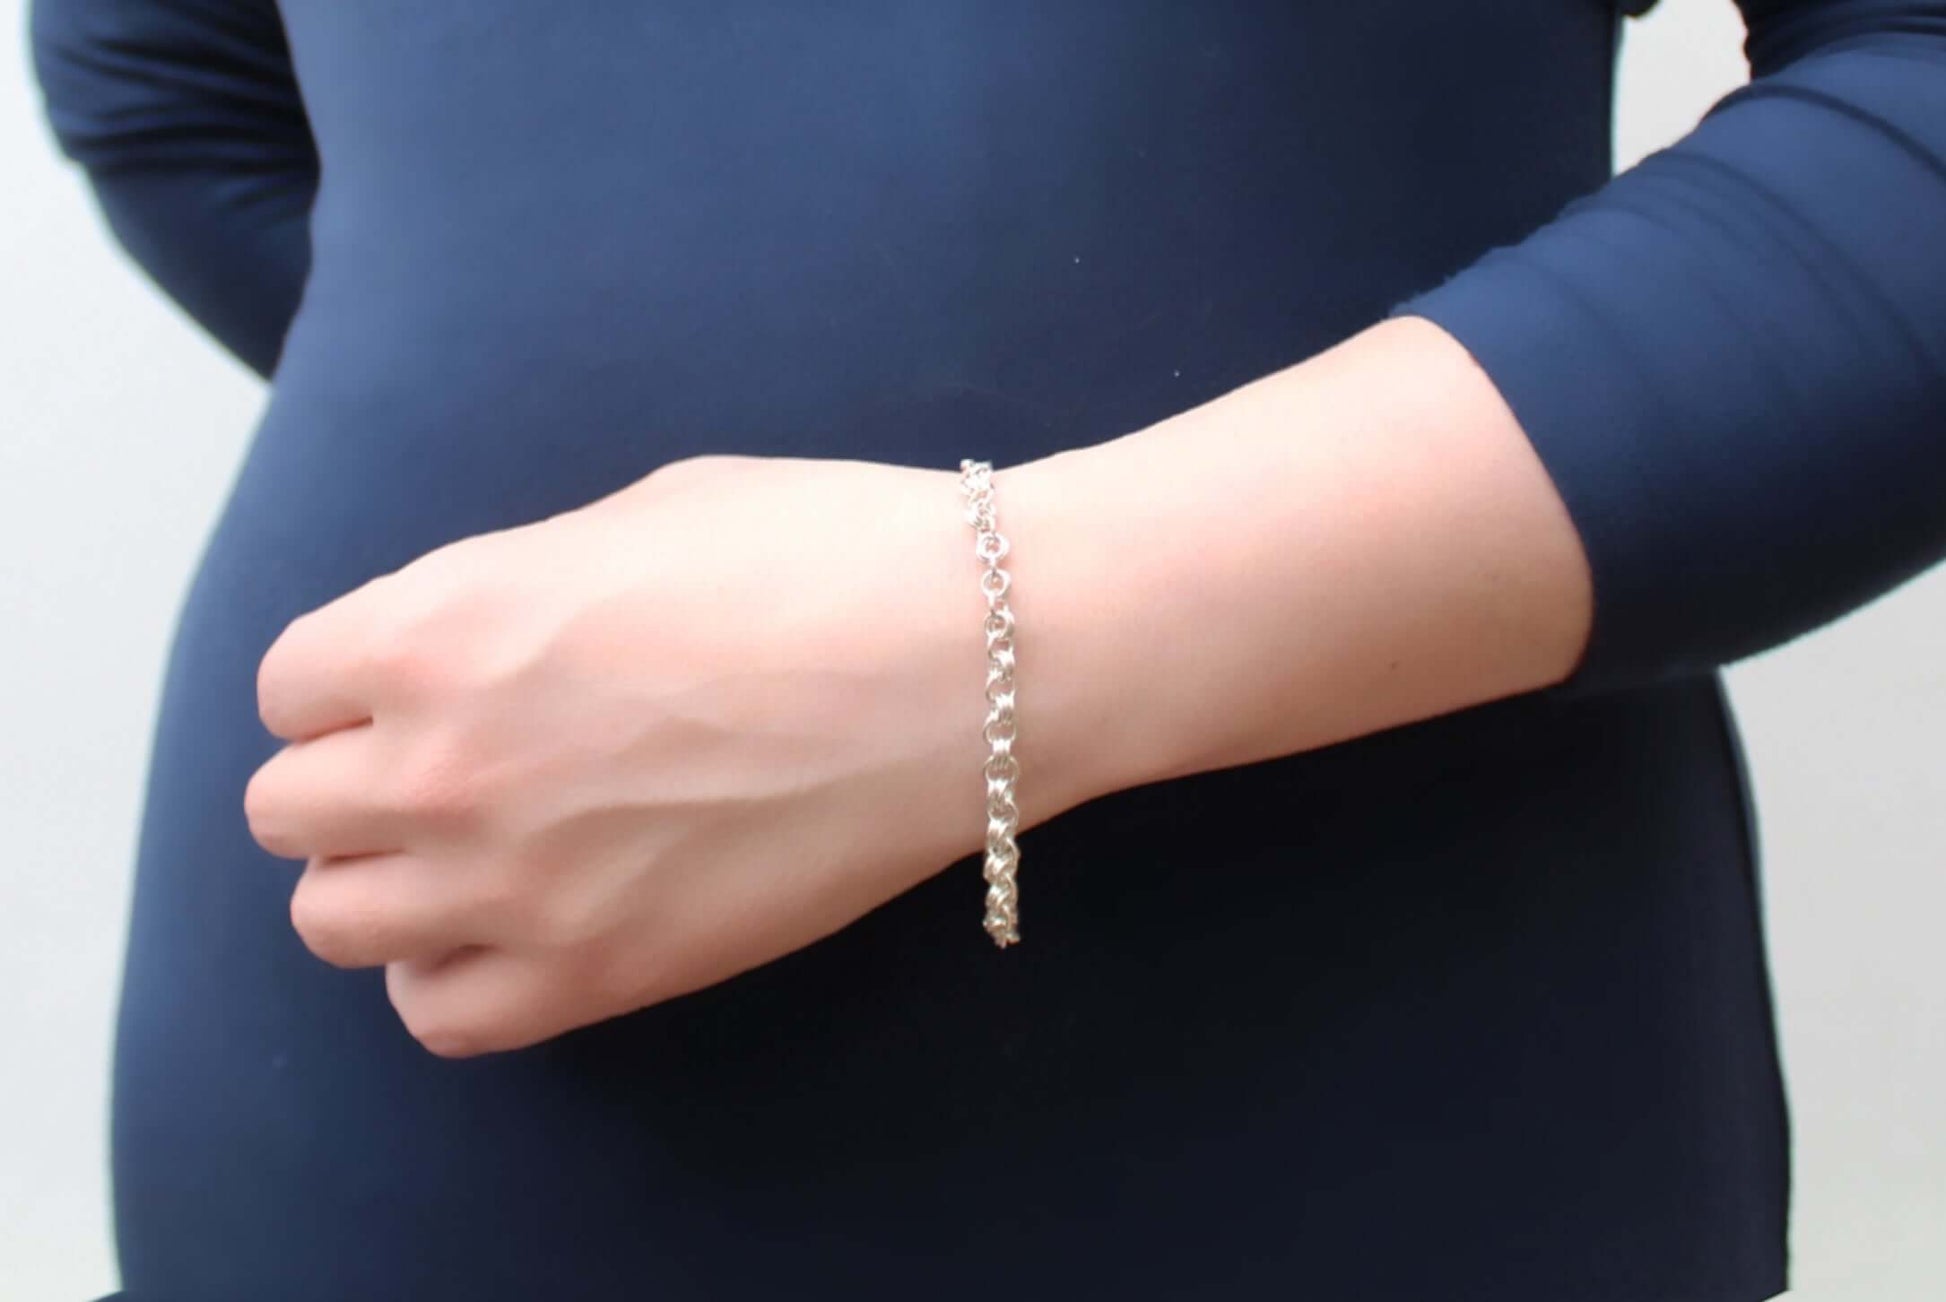 Everyday Sterling Silver Bracelet worn by model | Atlantic Rose